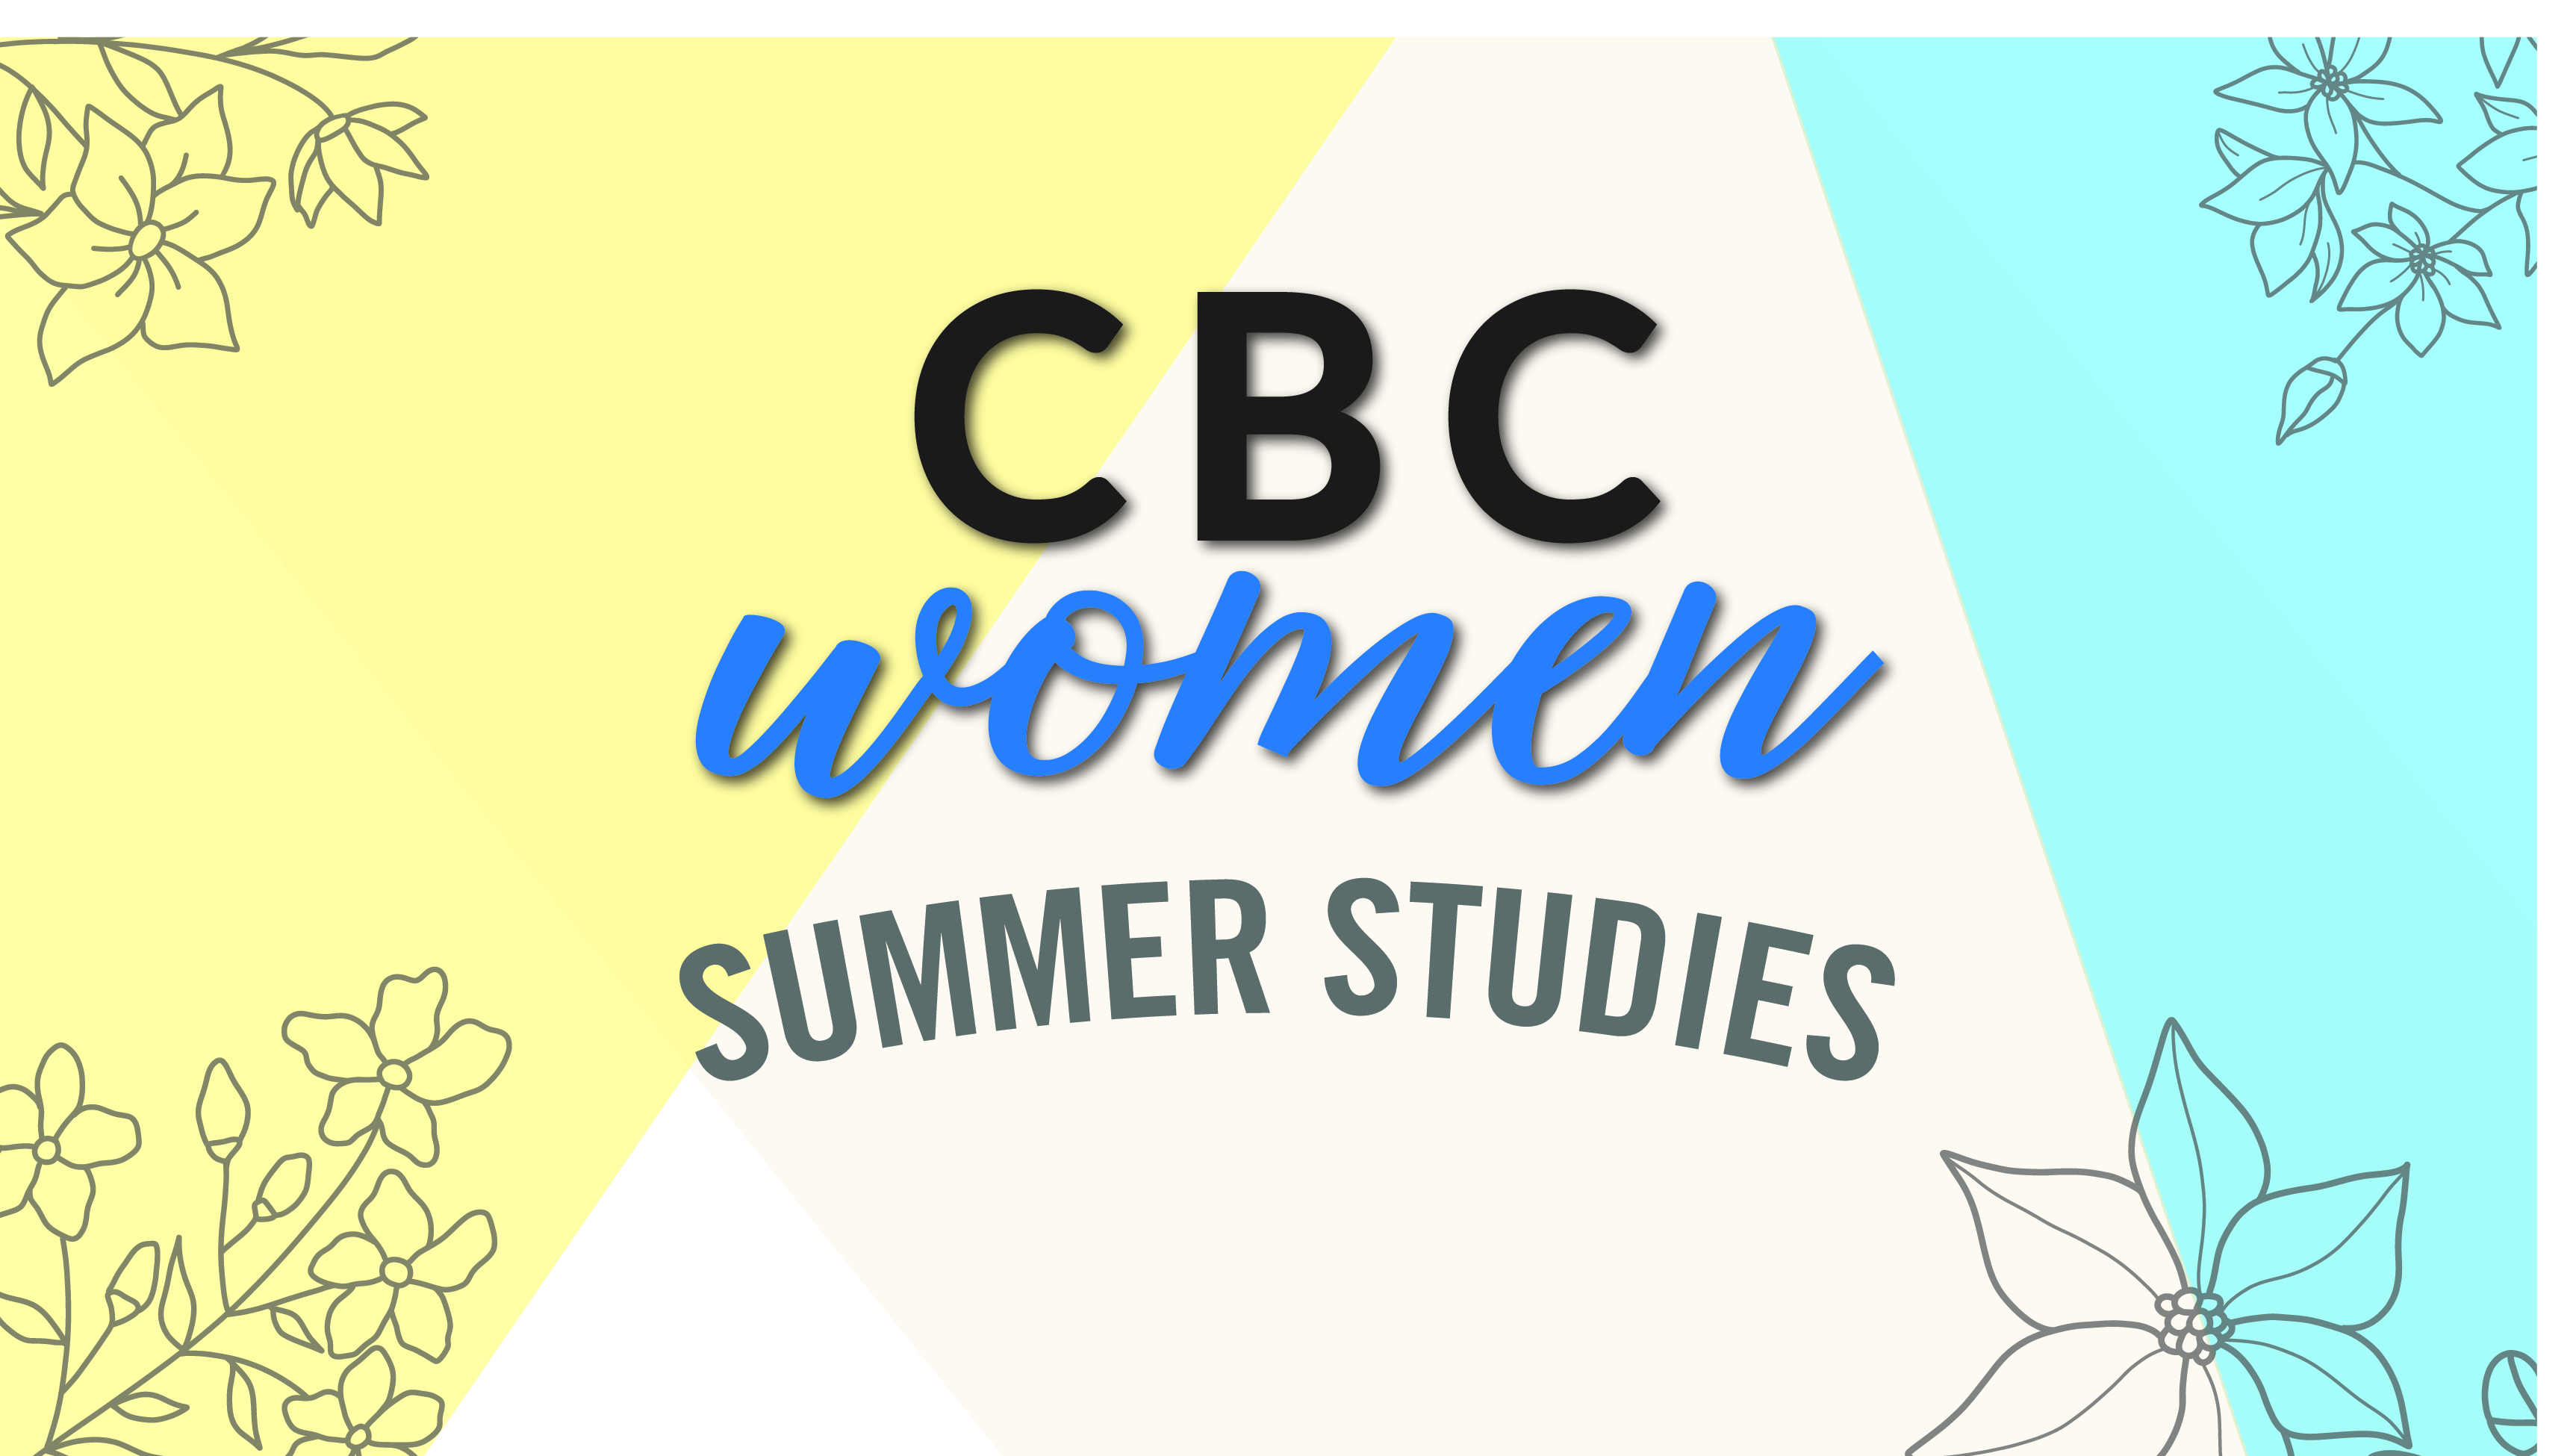 CBC WOMEN Summer Studies-01 image